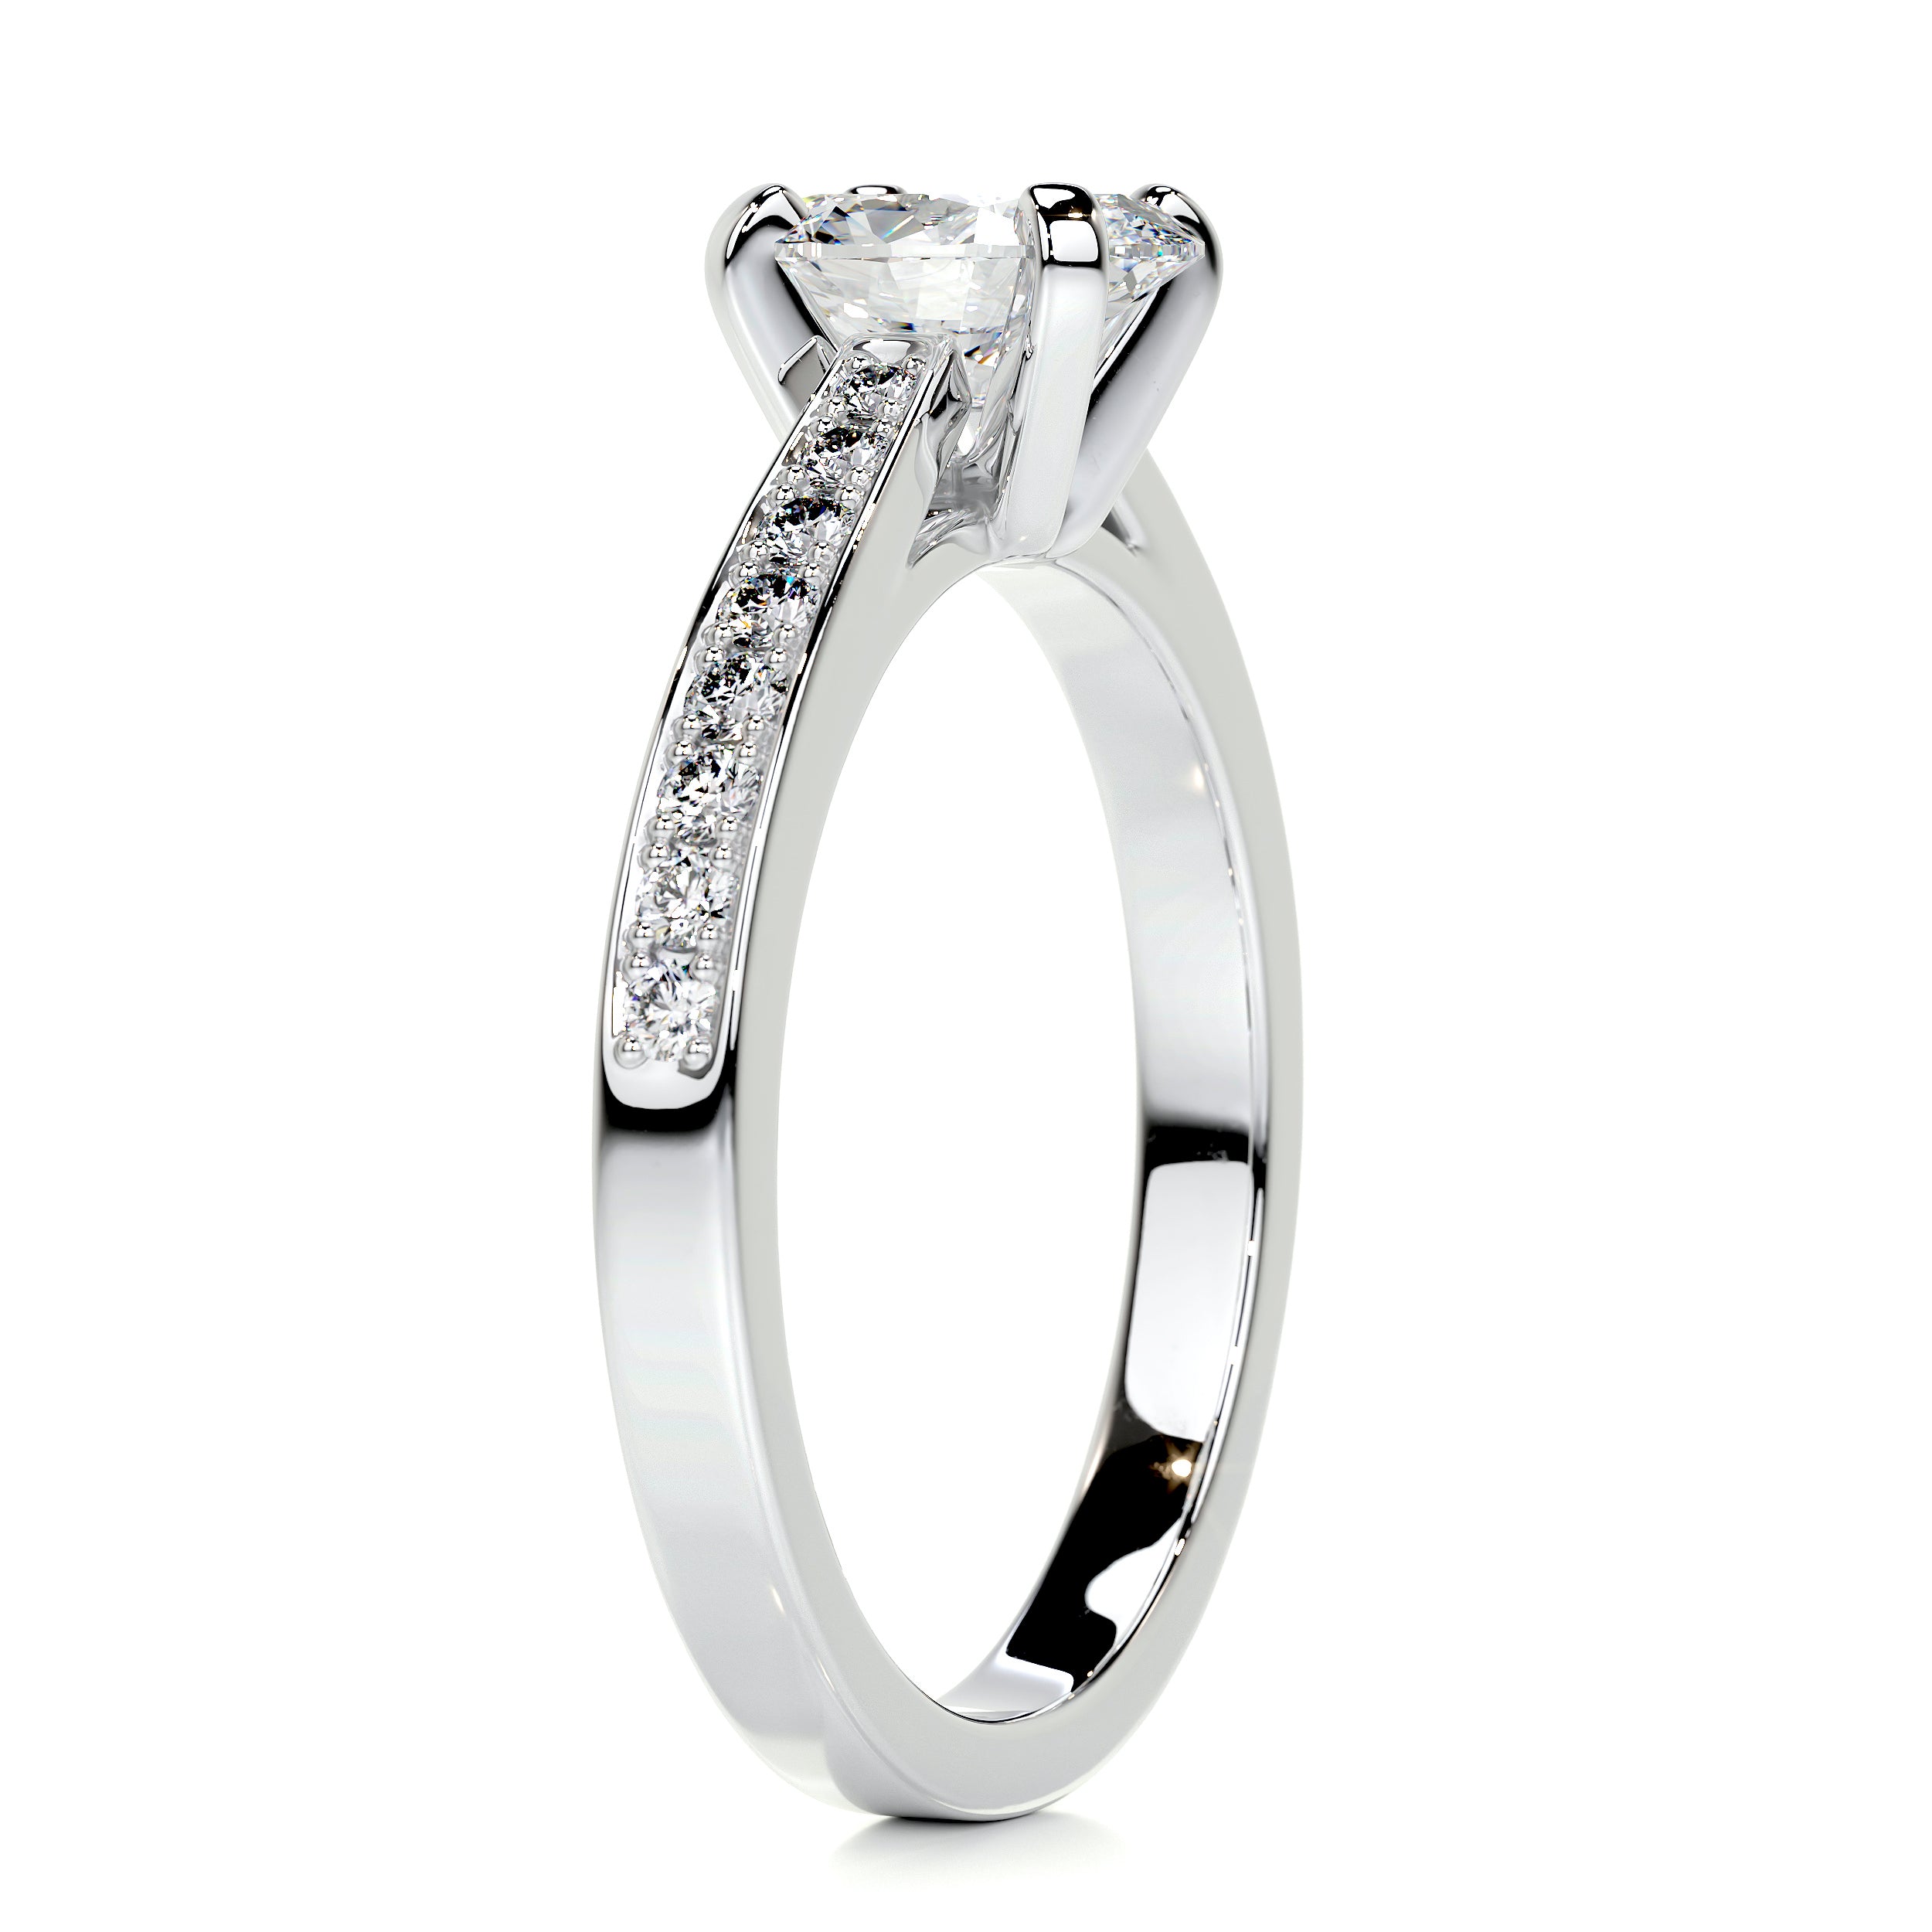 Talia Diamond Engagement Ring -14K White Gold